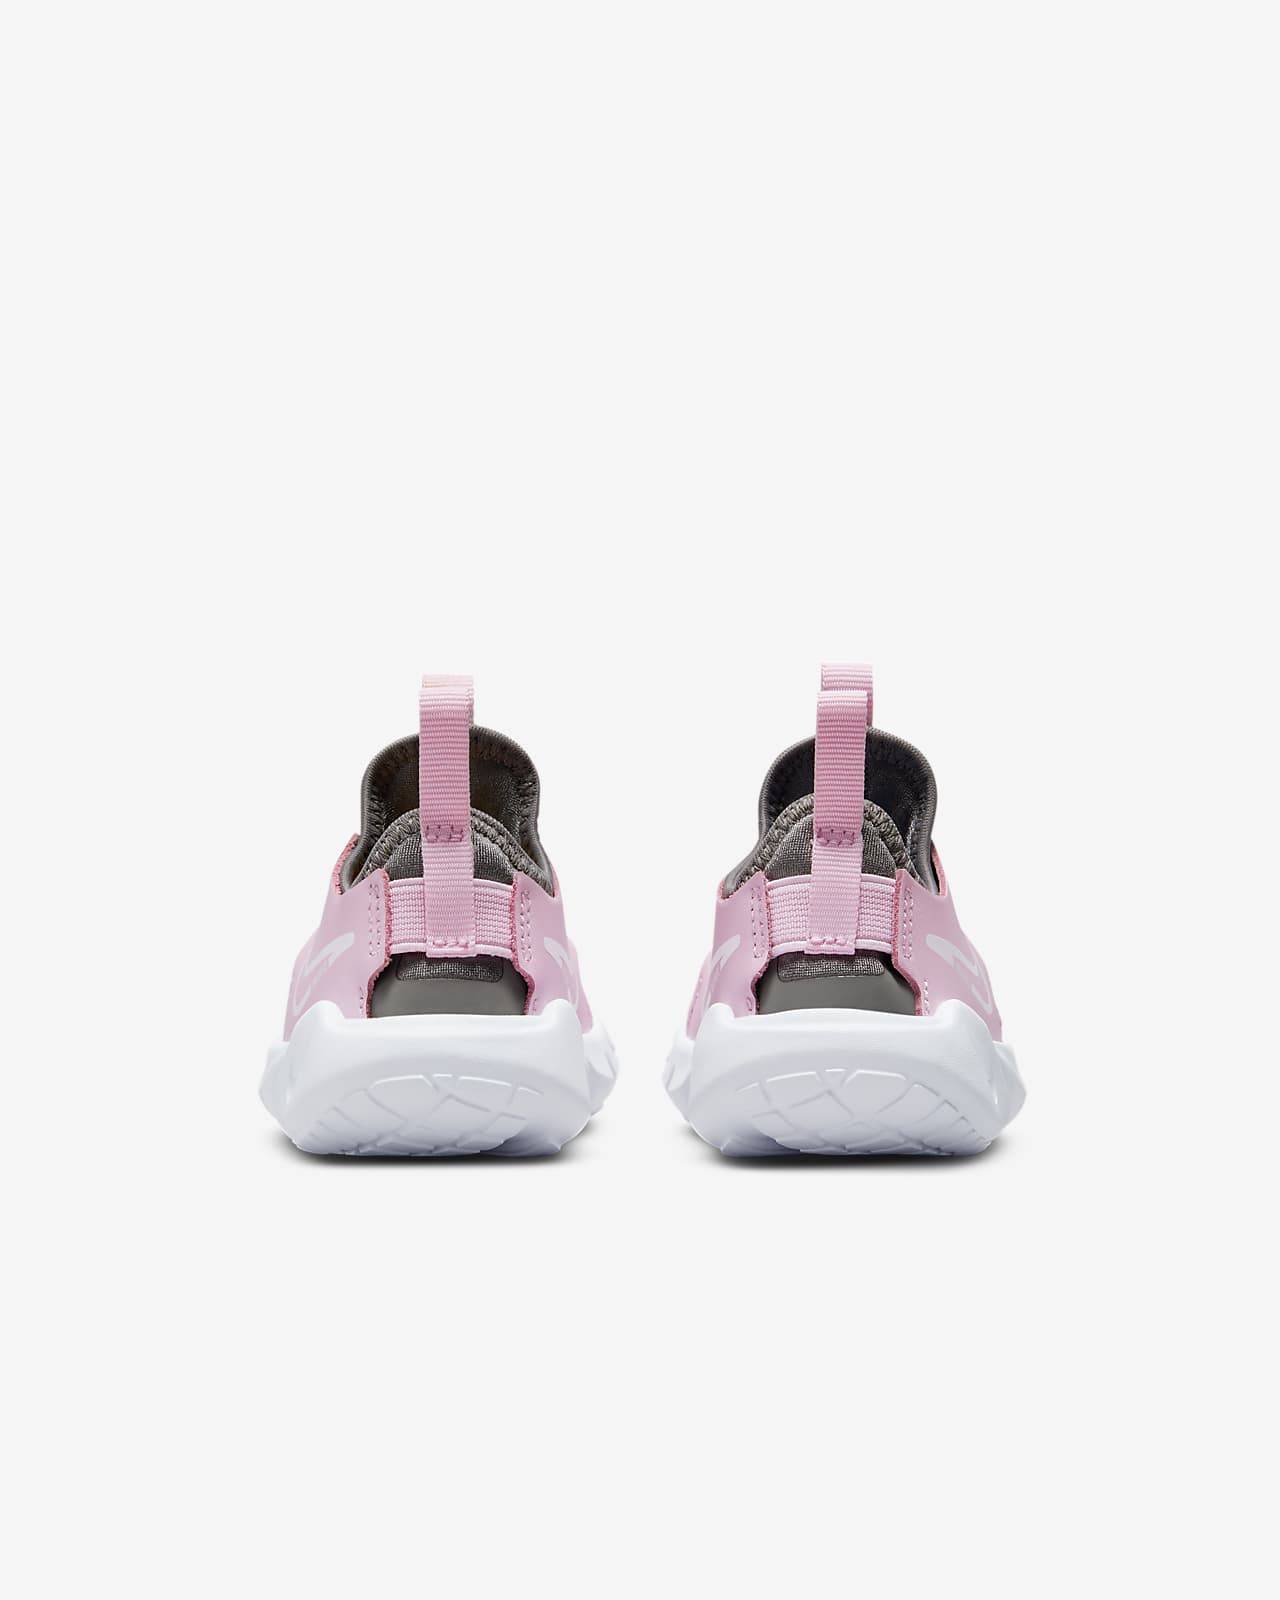 Nike Mixte enfant Flex Runner 2 Baby Toddler Shoes, Black White